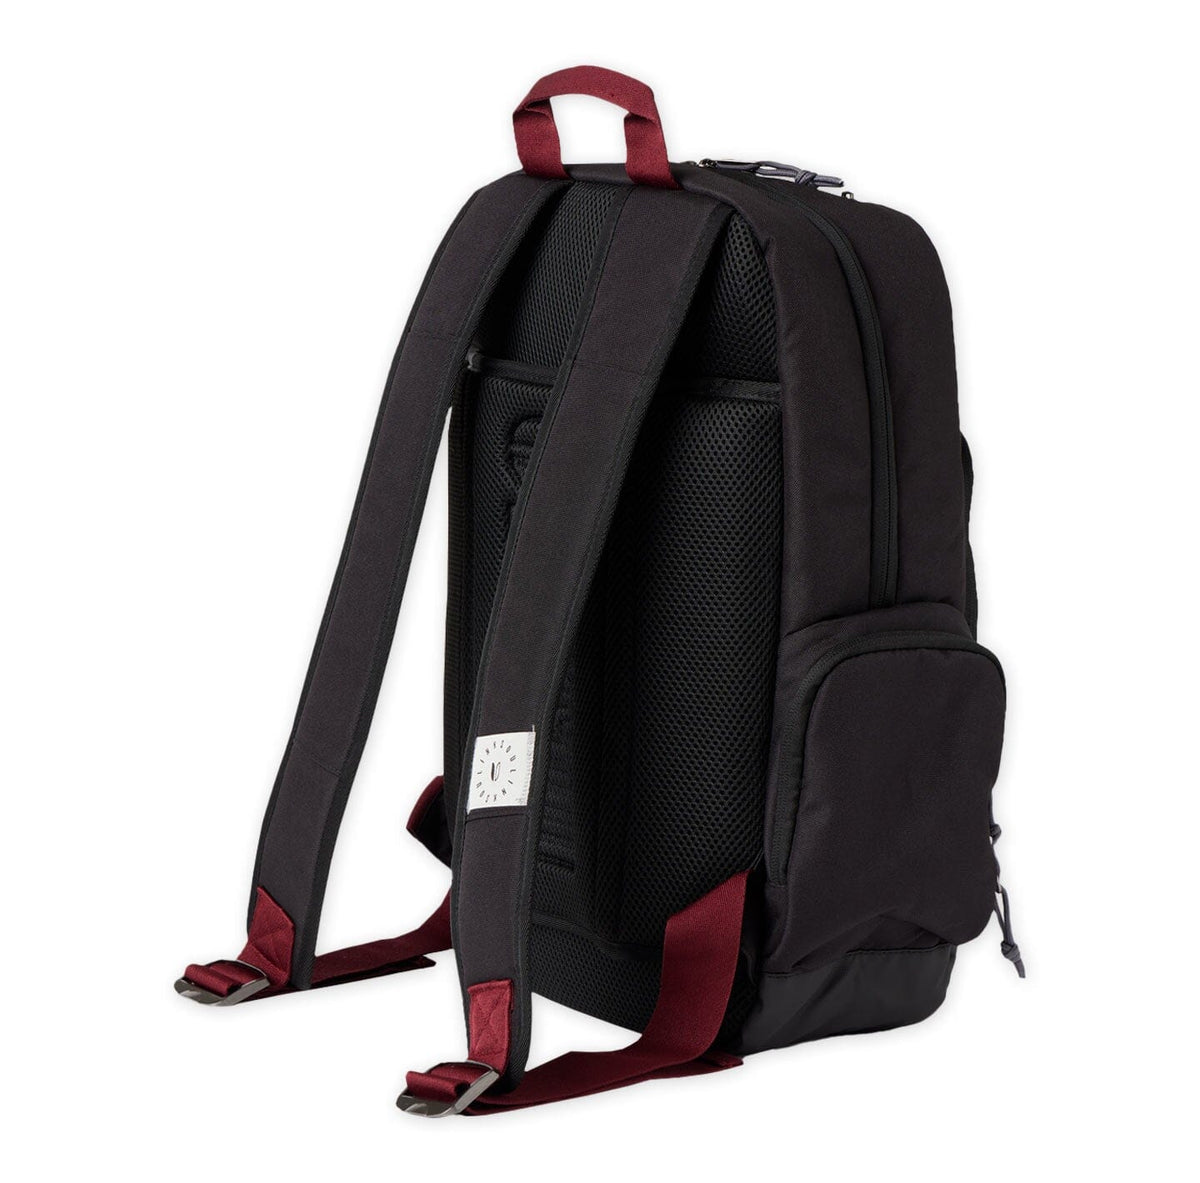 Linksouldier Backpack